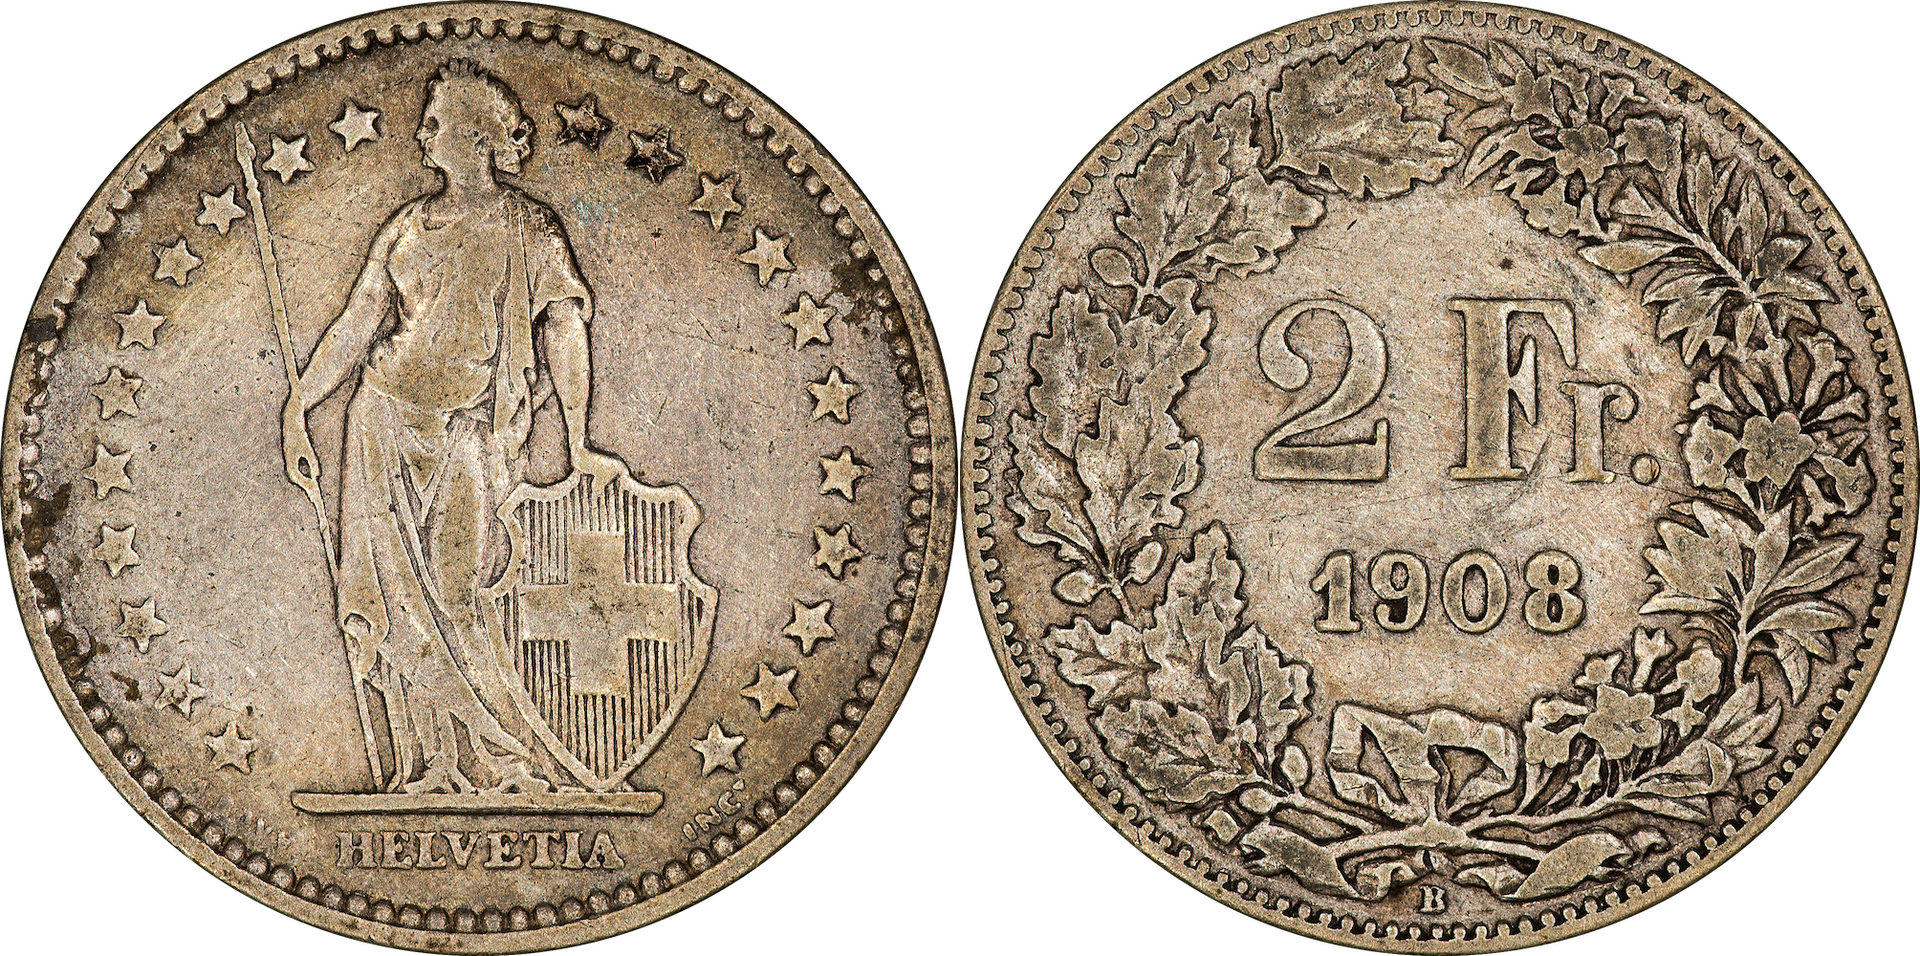 Switzerland - 1908 B 2 Francs.jpg